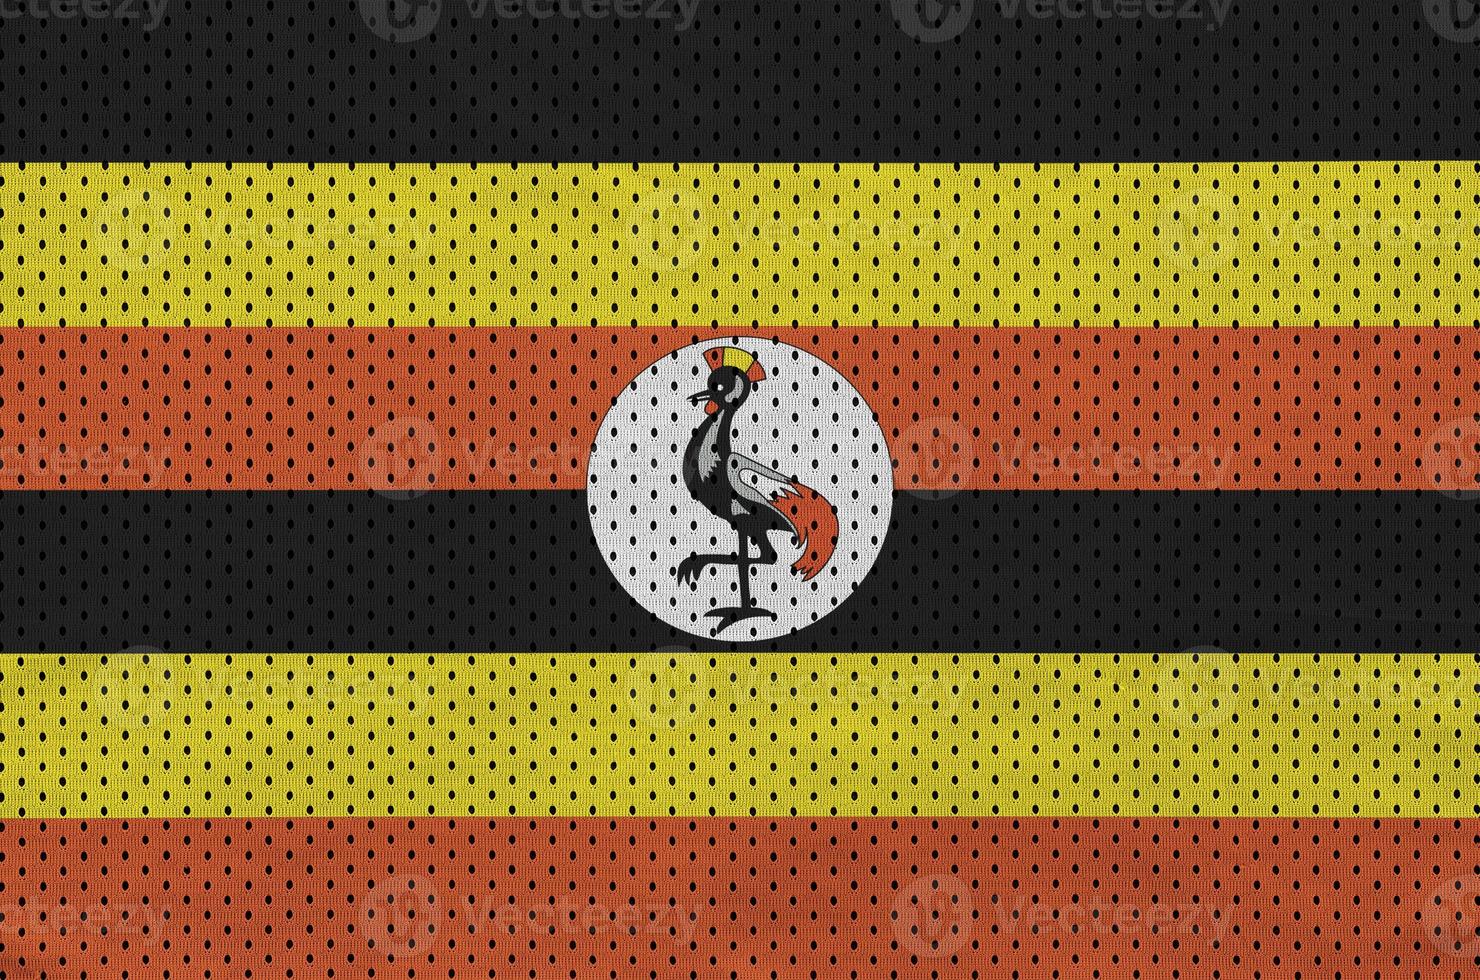 Uganda flag printed on a polyester nylon sportswear mesh fabric photo